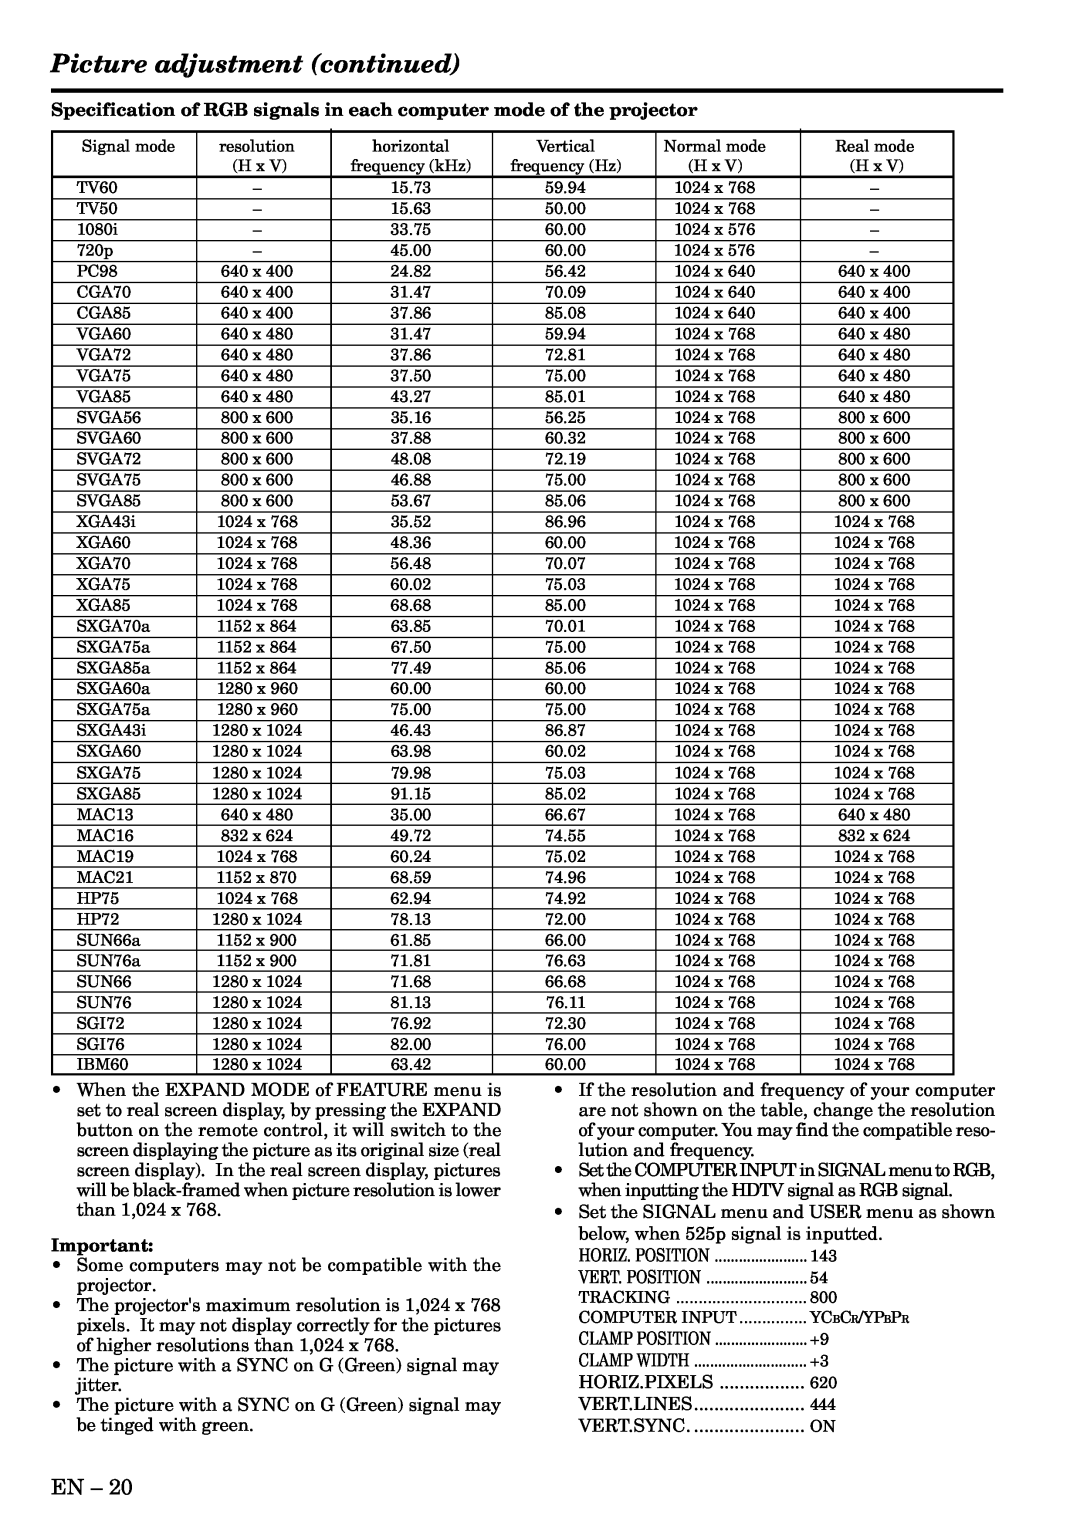 Mitsubishi Electronics X70U user manual Picture adjustment continued 